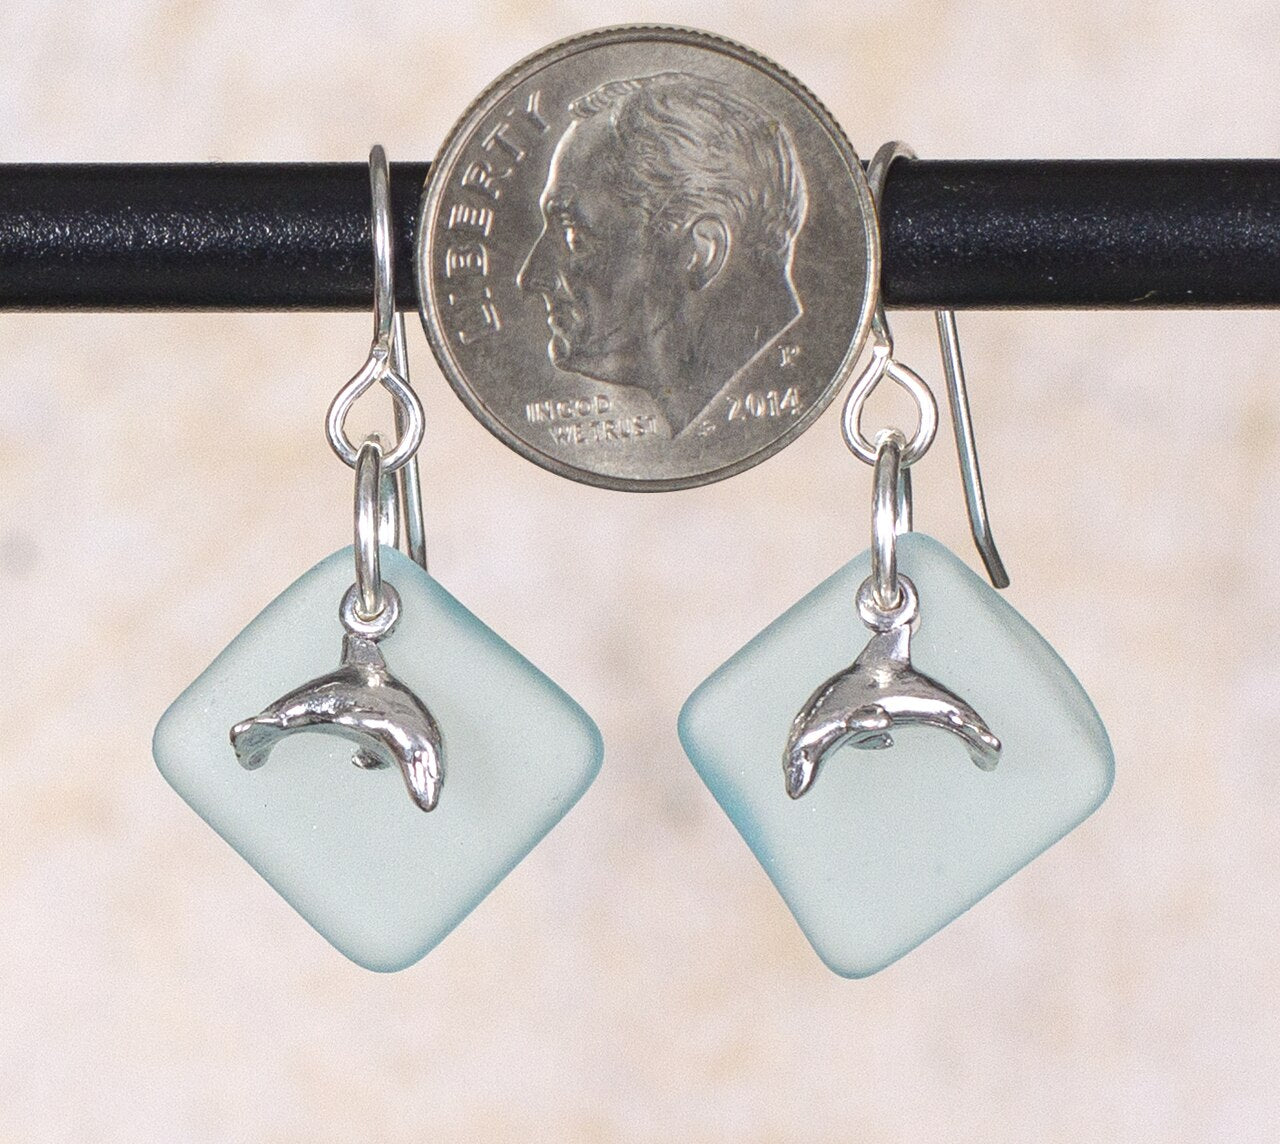 Seaglass Dolphin Earrings